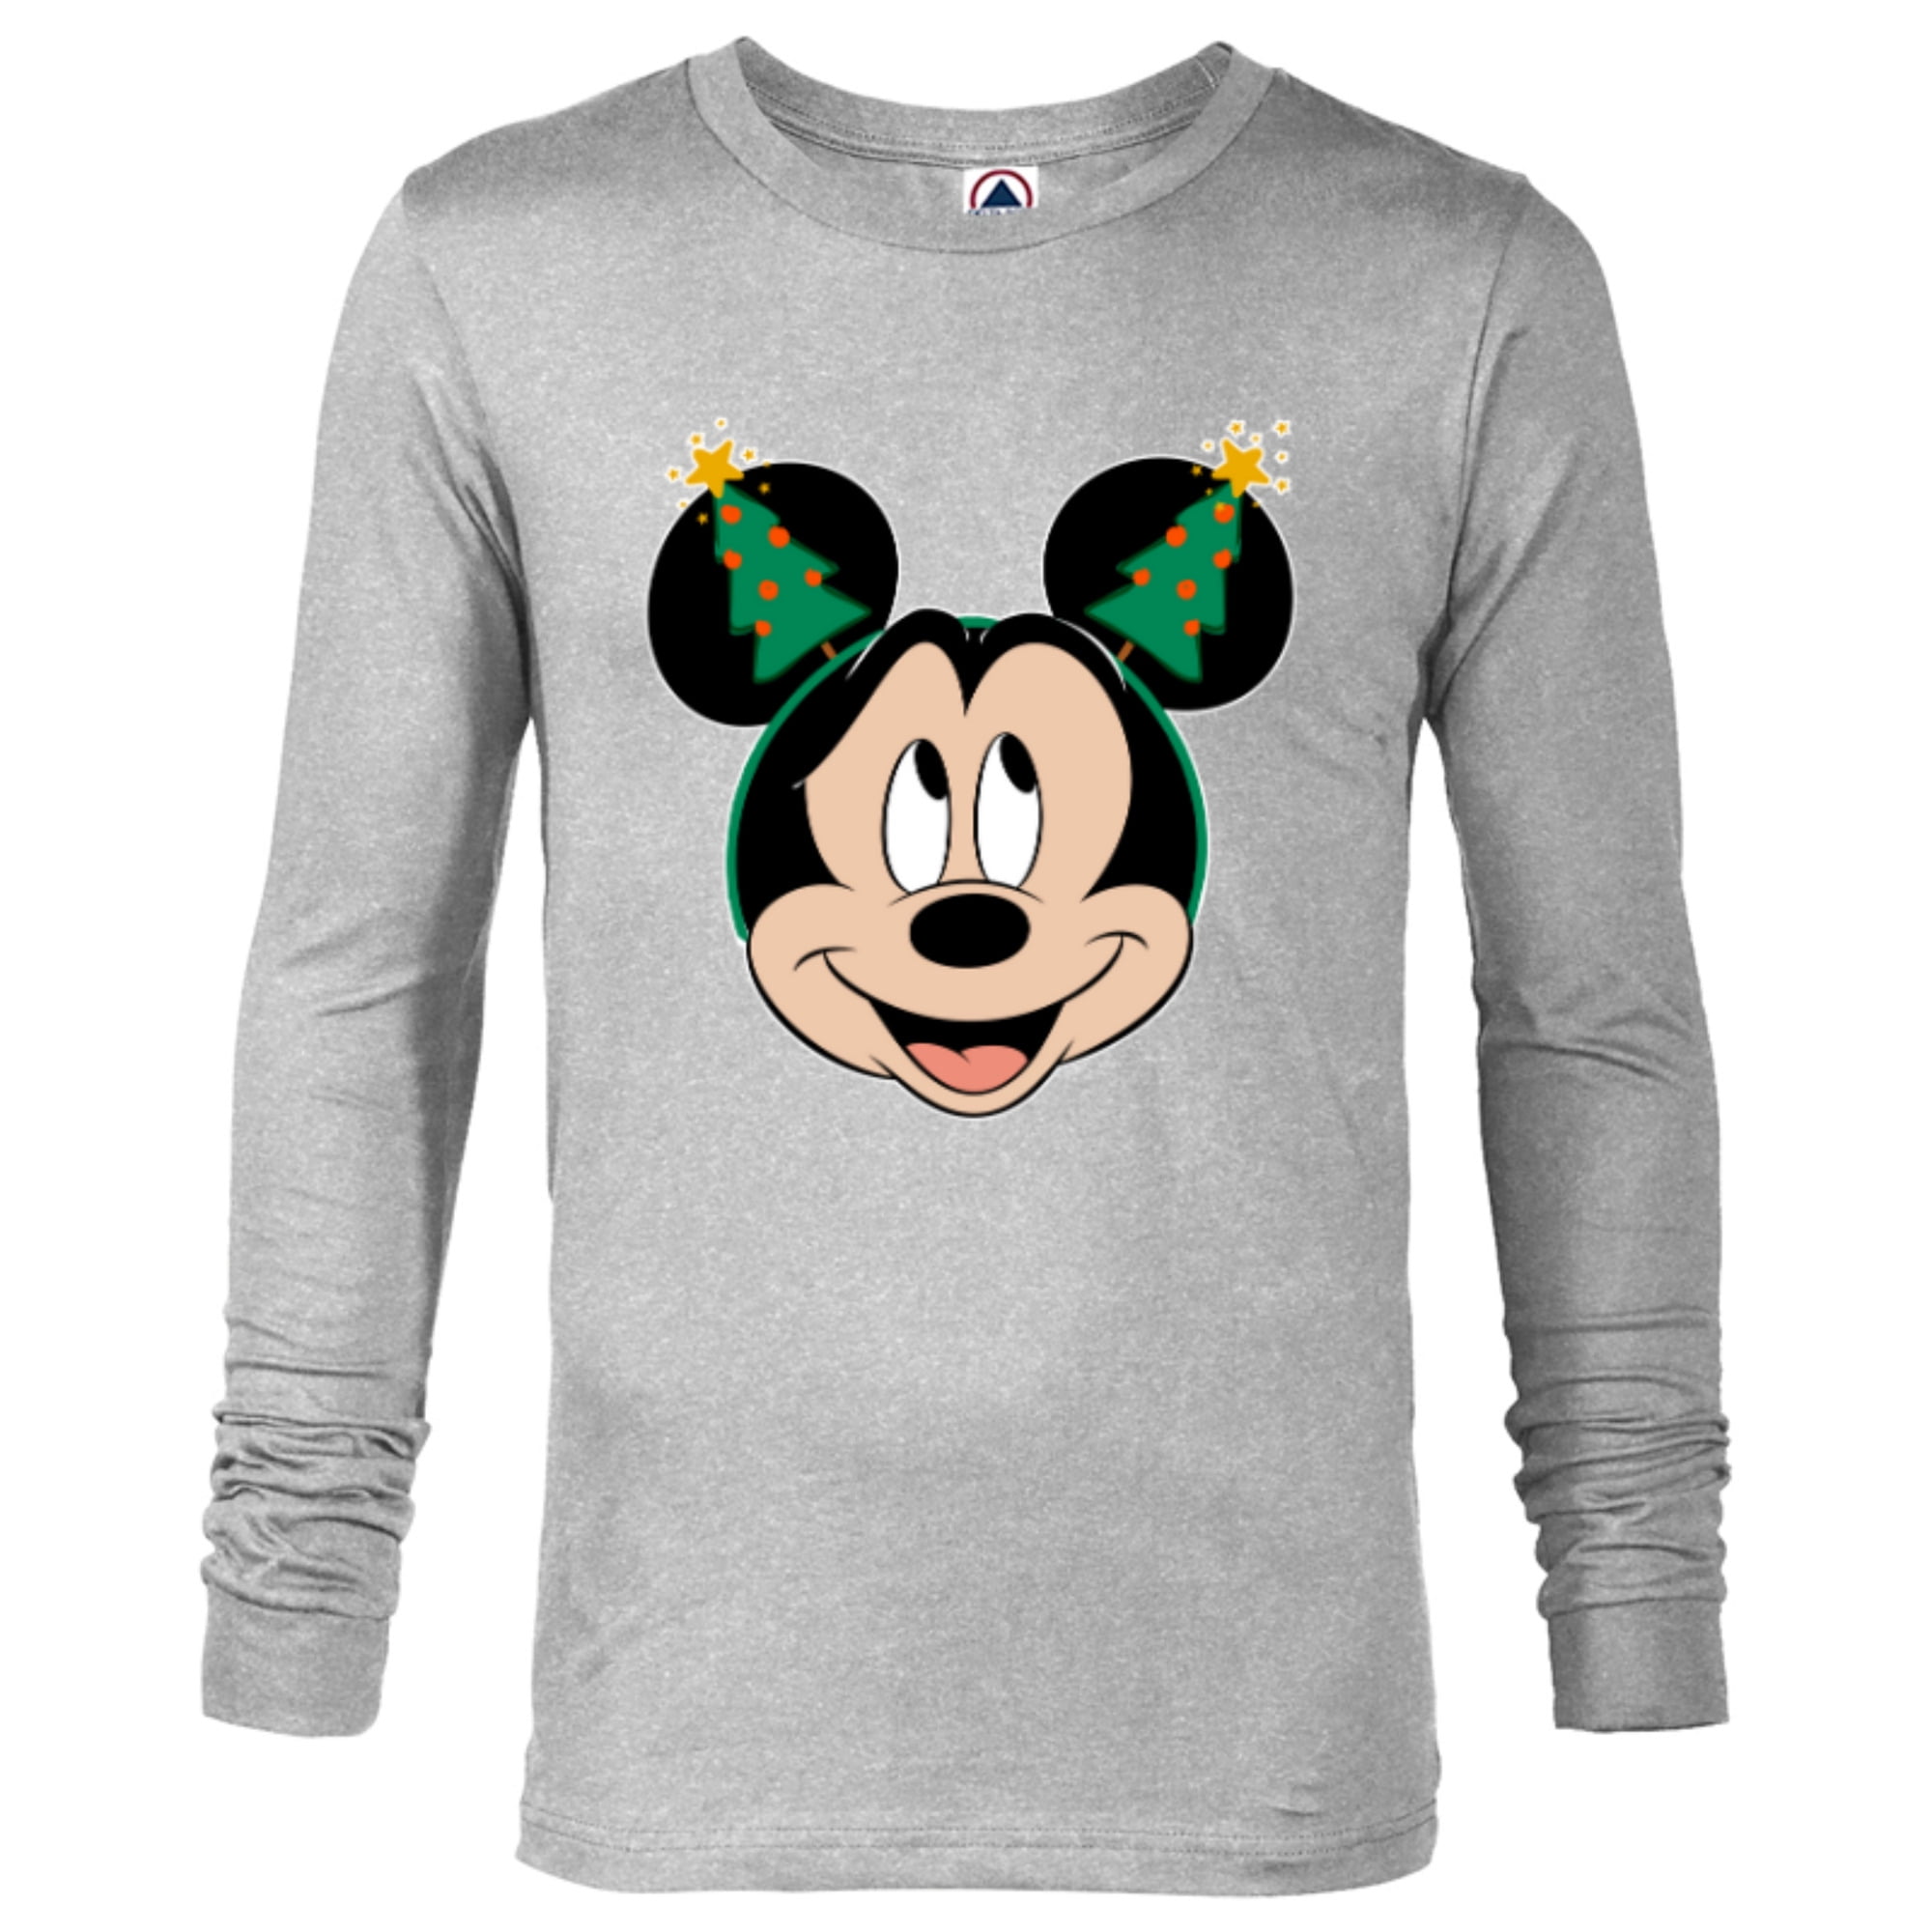 Santa Mickey Mouse Adult T Shirt Disney Trip Matching Shirts Mickey Mouse T  Shirt Christmas Holiday 